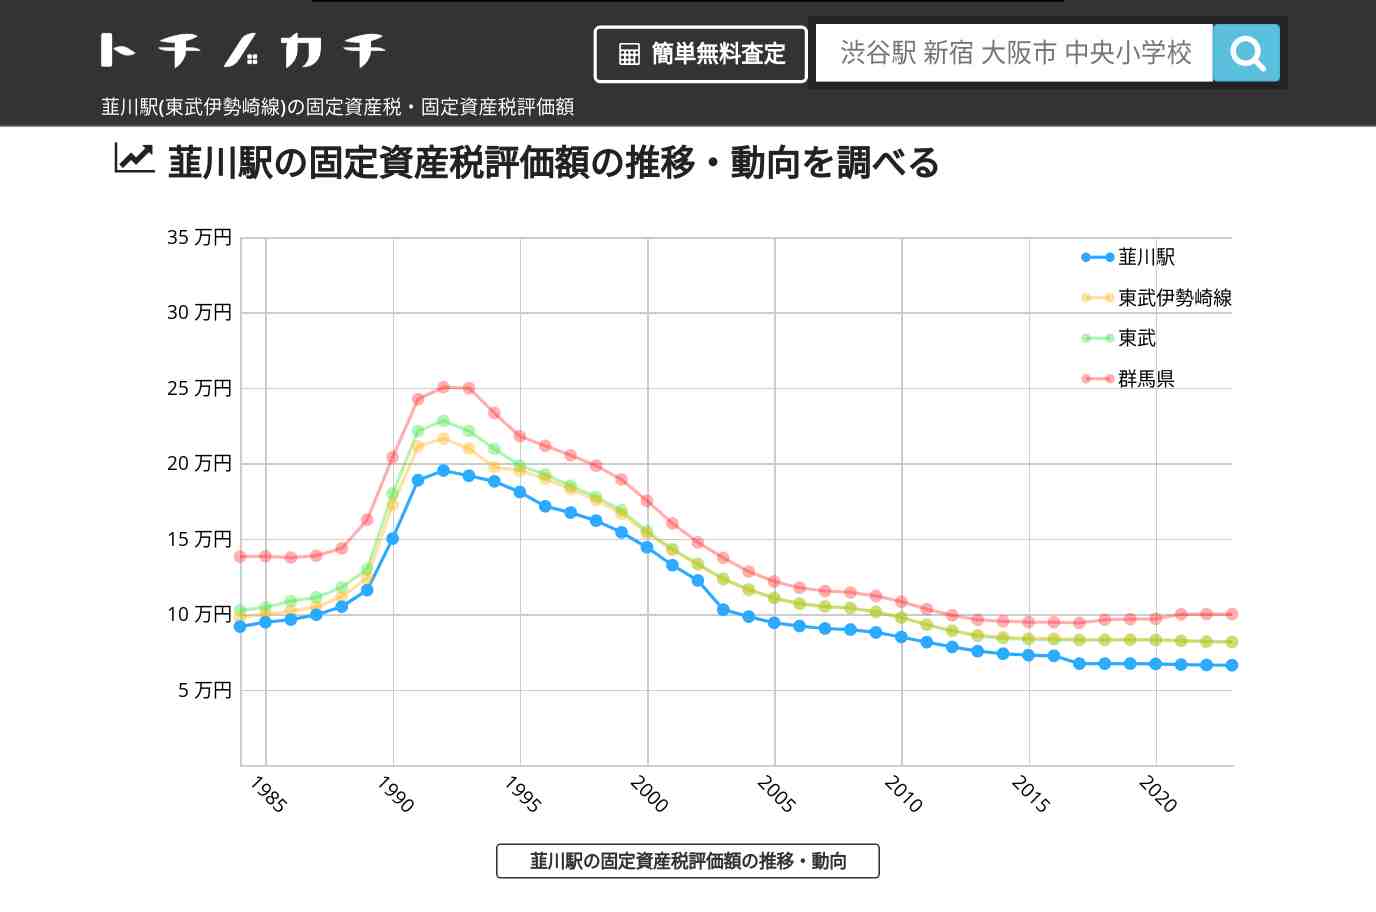 韮川駅(東武伊勢崎線)の固定資産税・固定資産税評価額 | トチノカチ